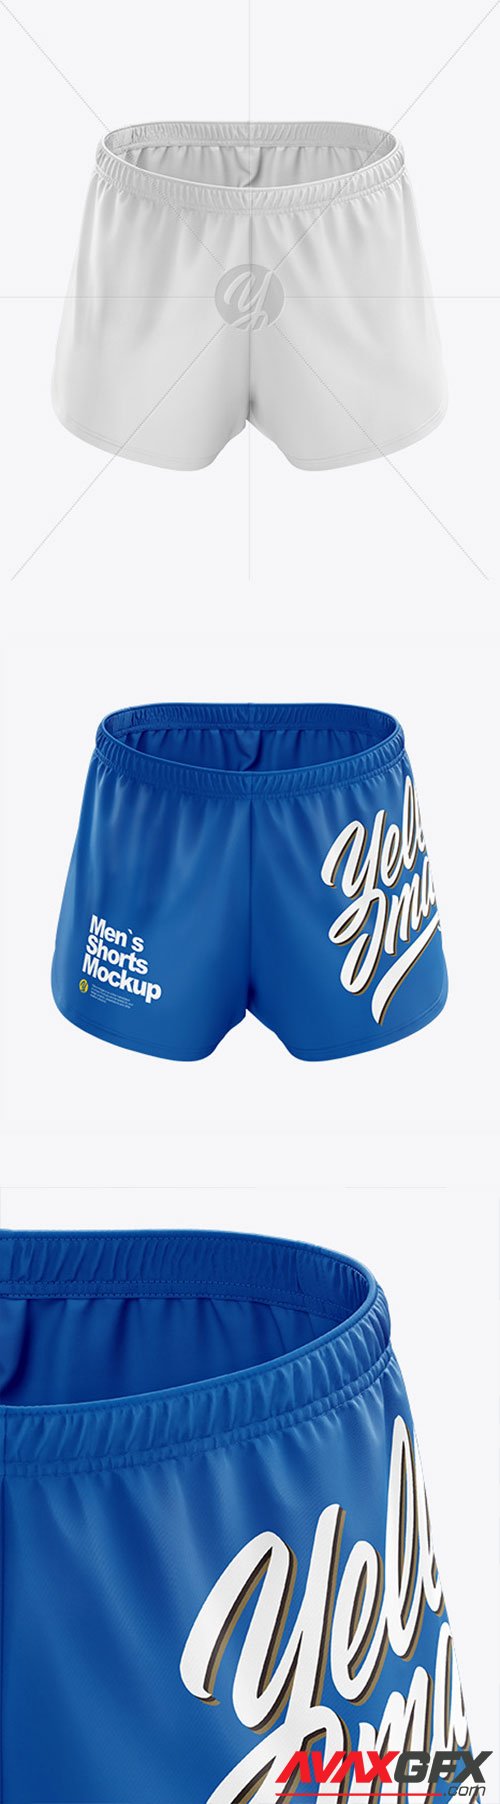 Men’s Split Shorts mockup (Front View) 56523